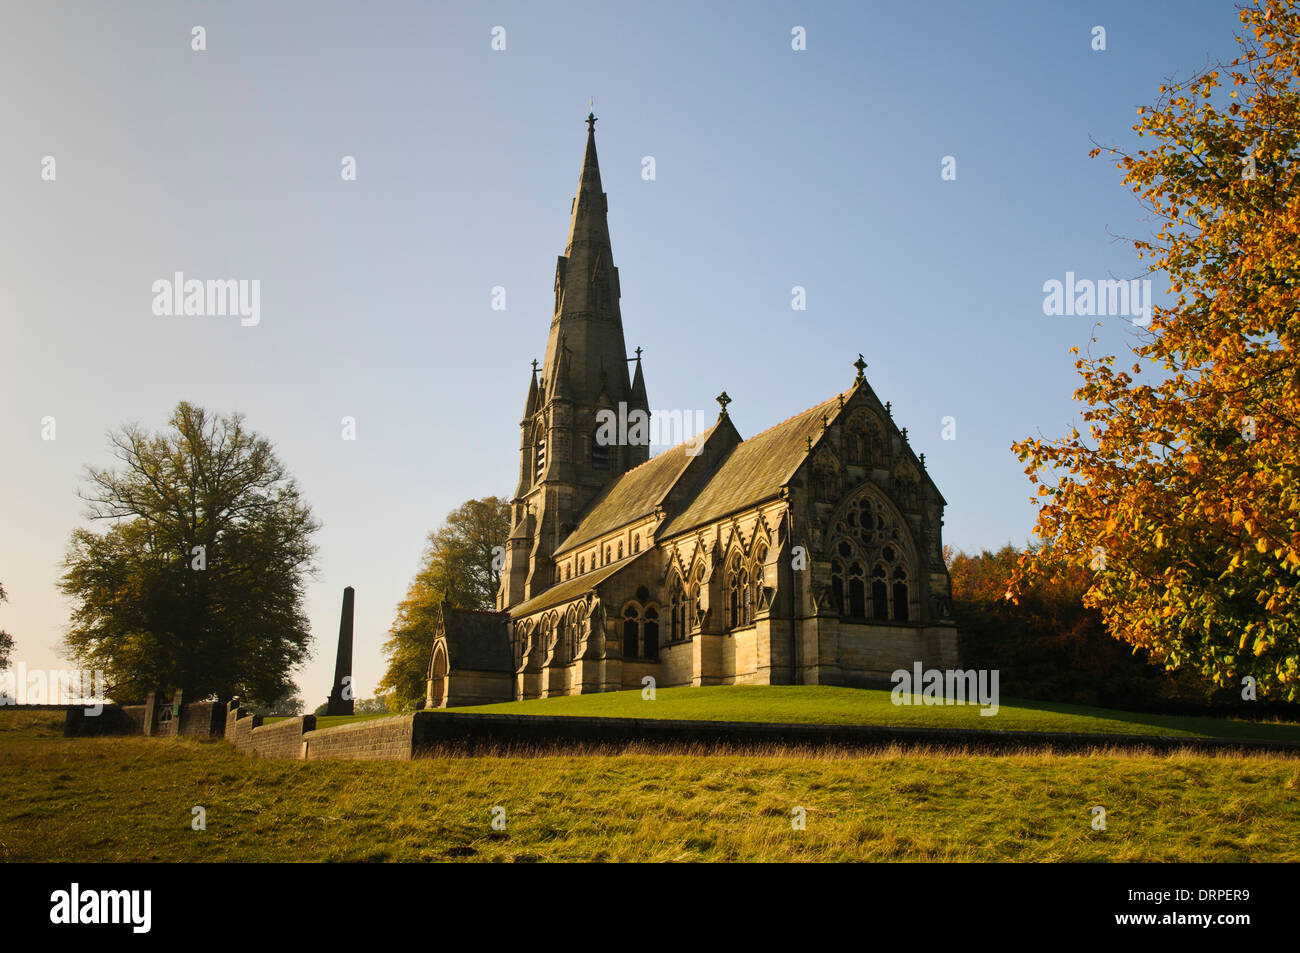 Str. Marys Kirche im Studley Royal, in der Nähe von Ripon, Nordyorkshire. Oktober. Stockfoto